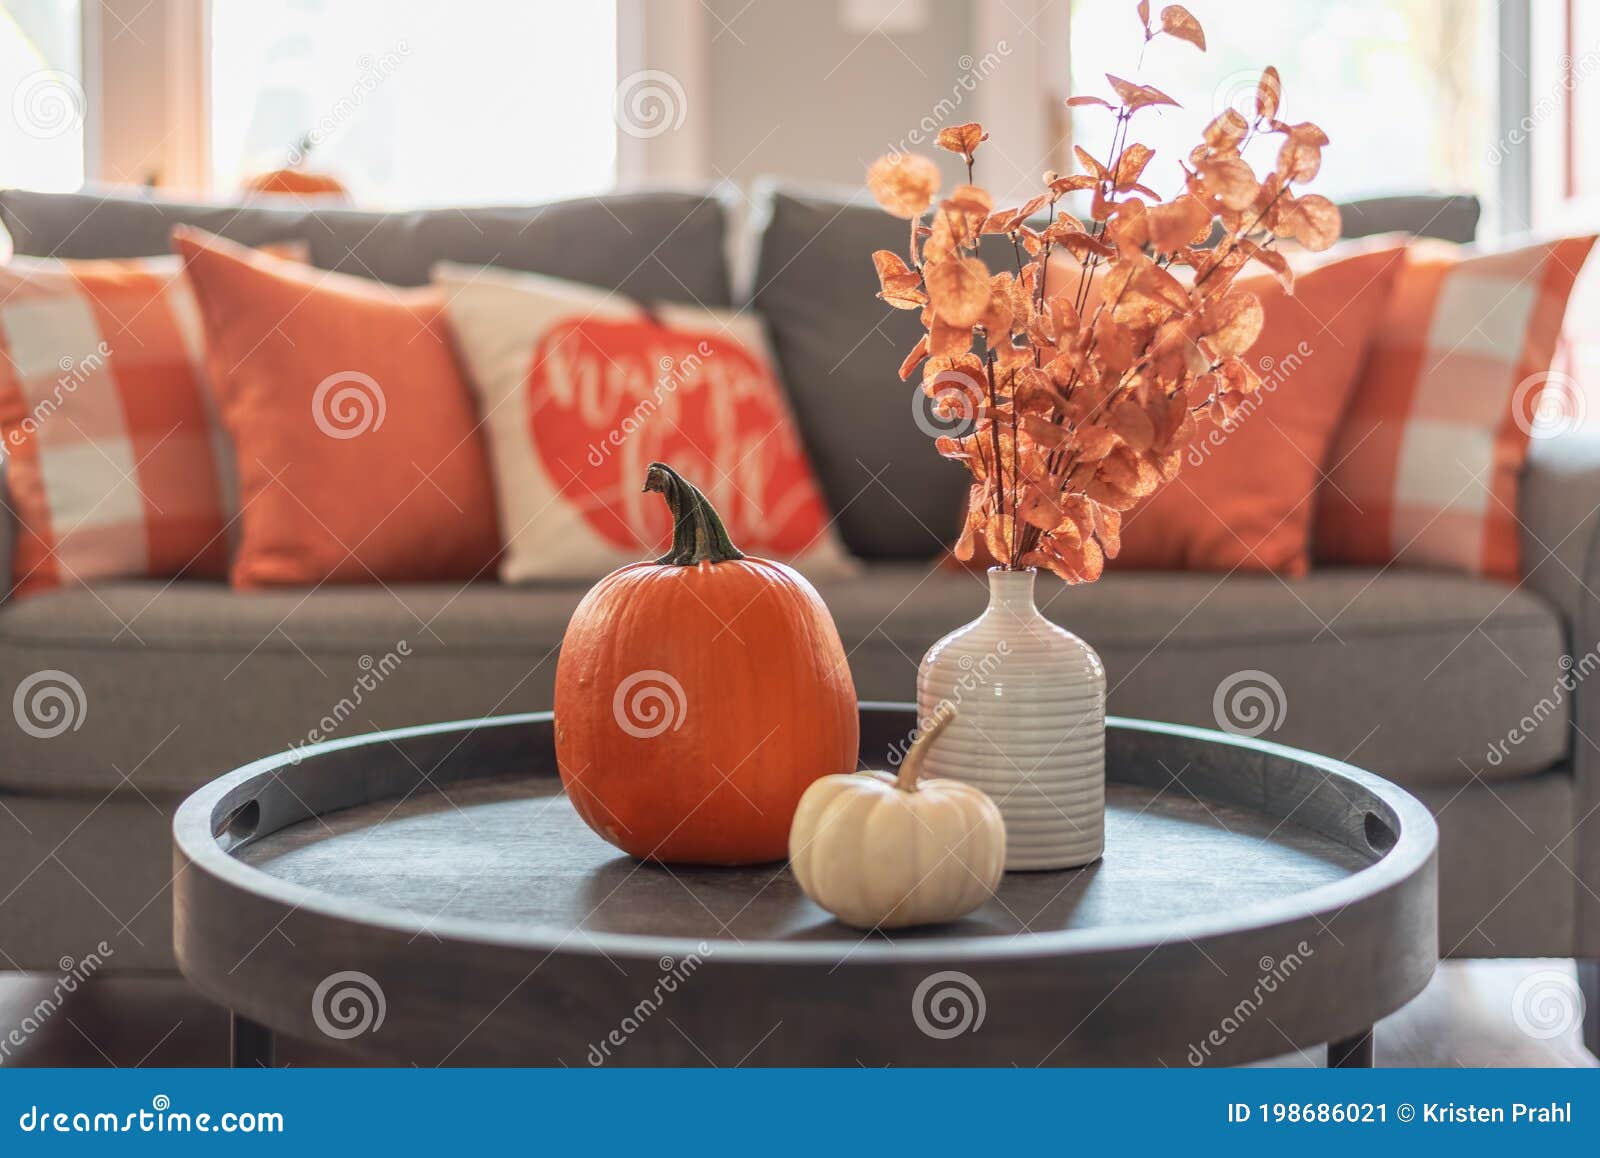 fall home decor in gray and orange tones